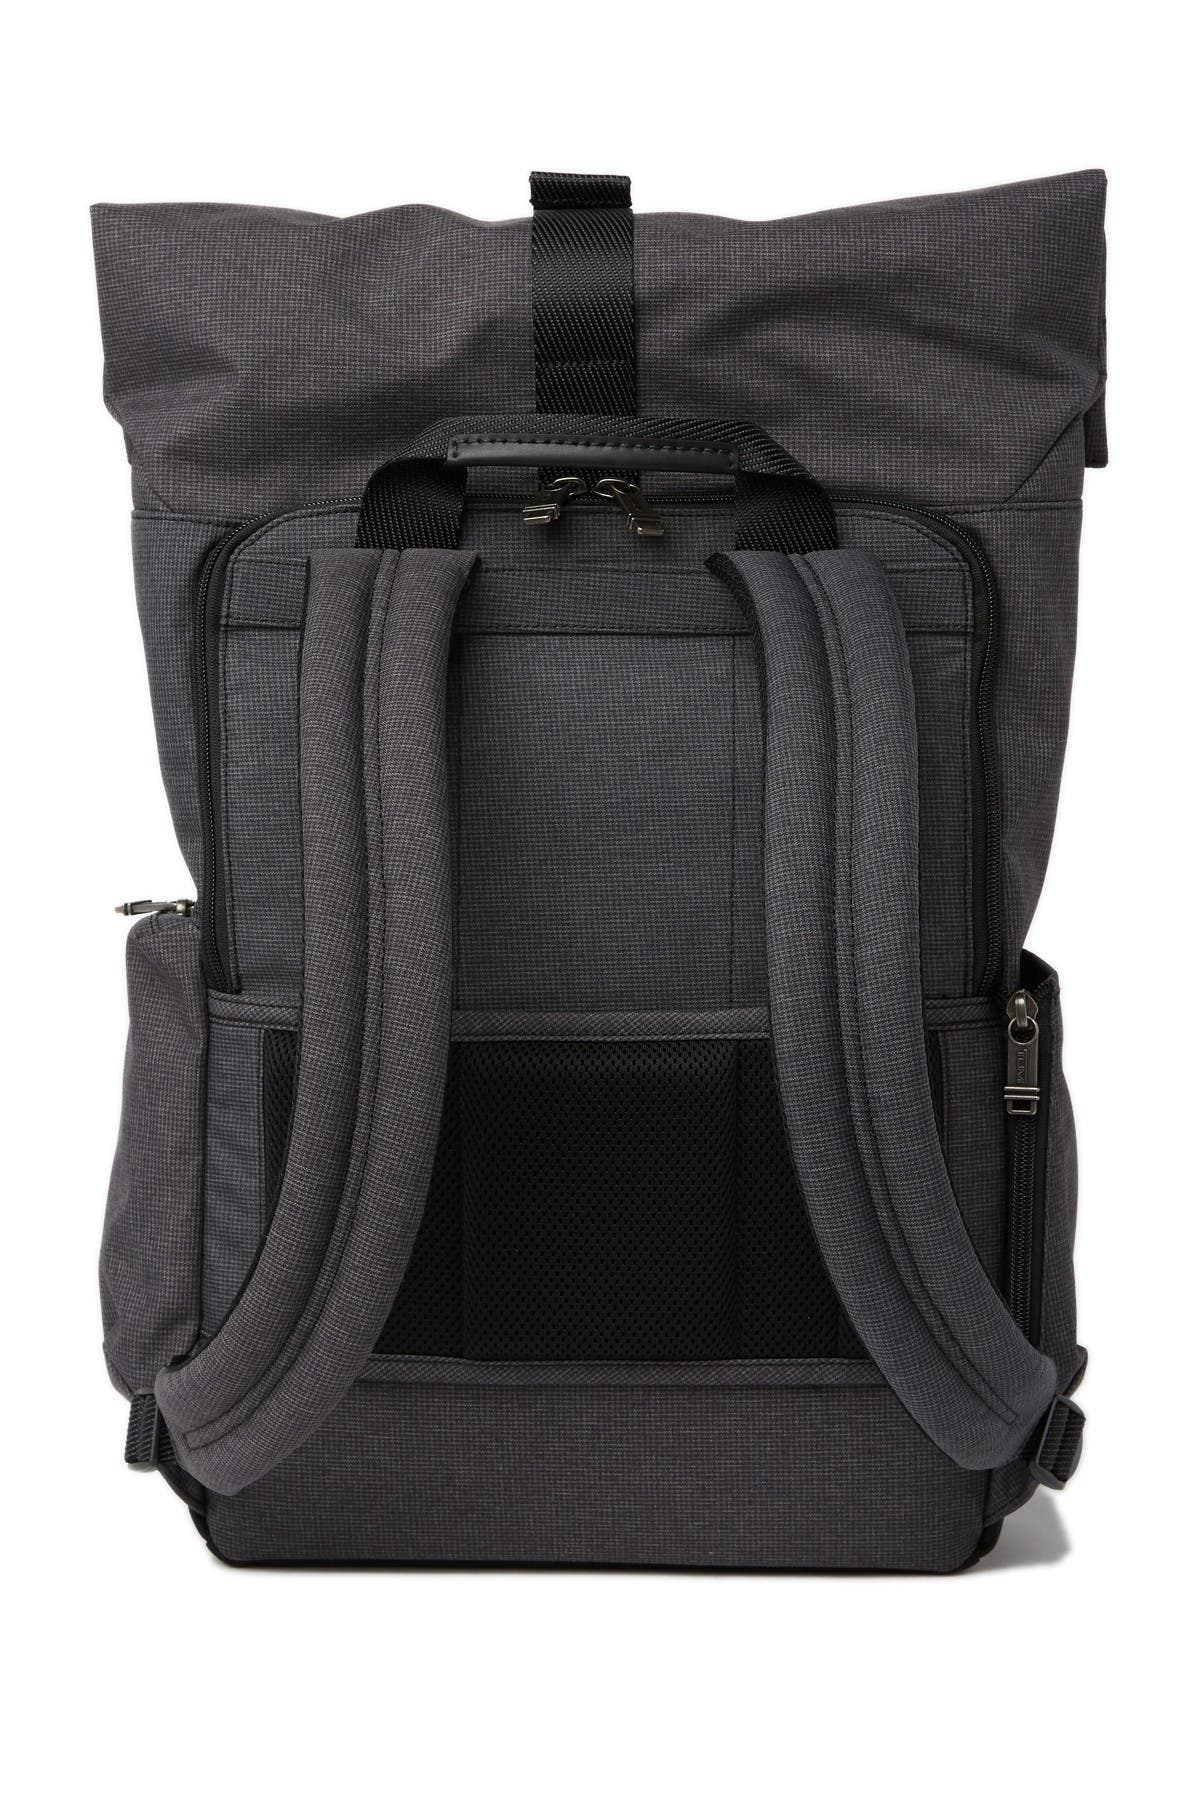 Tumi Birch Roll Top Backpack In Medium Grey2